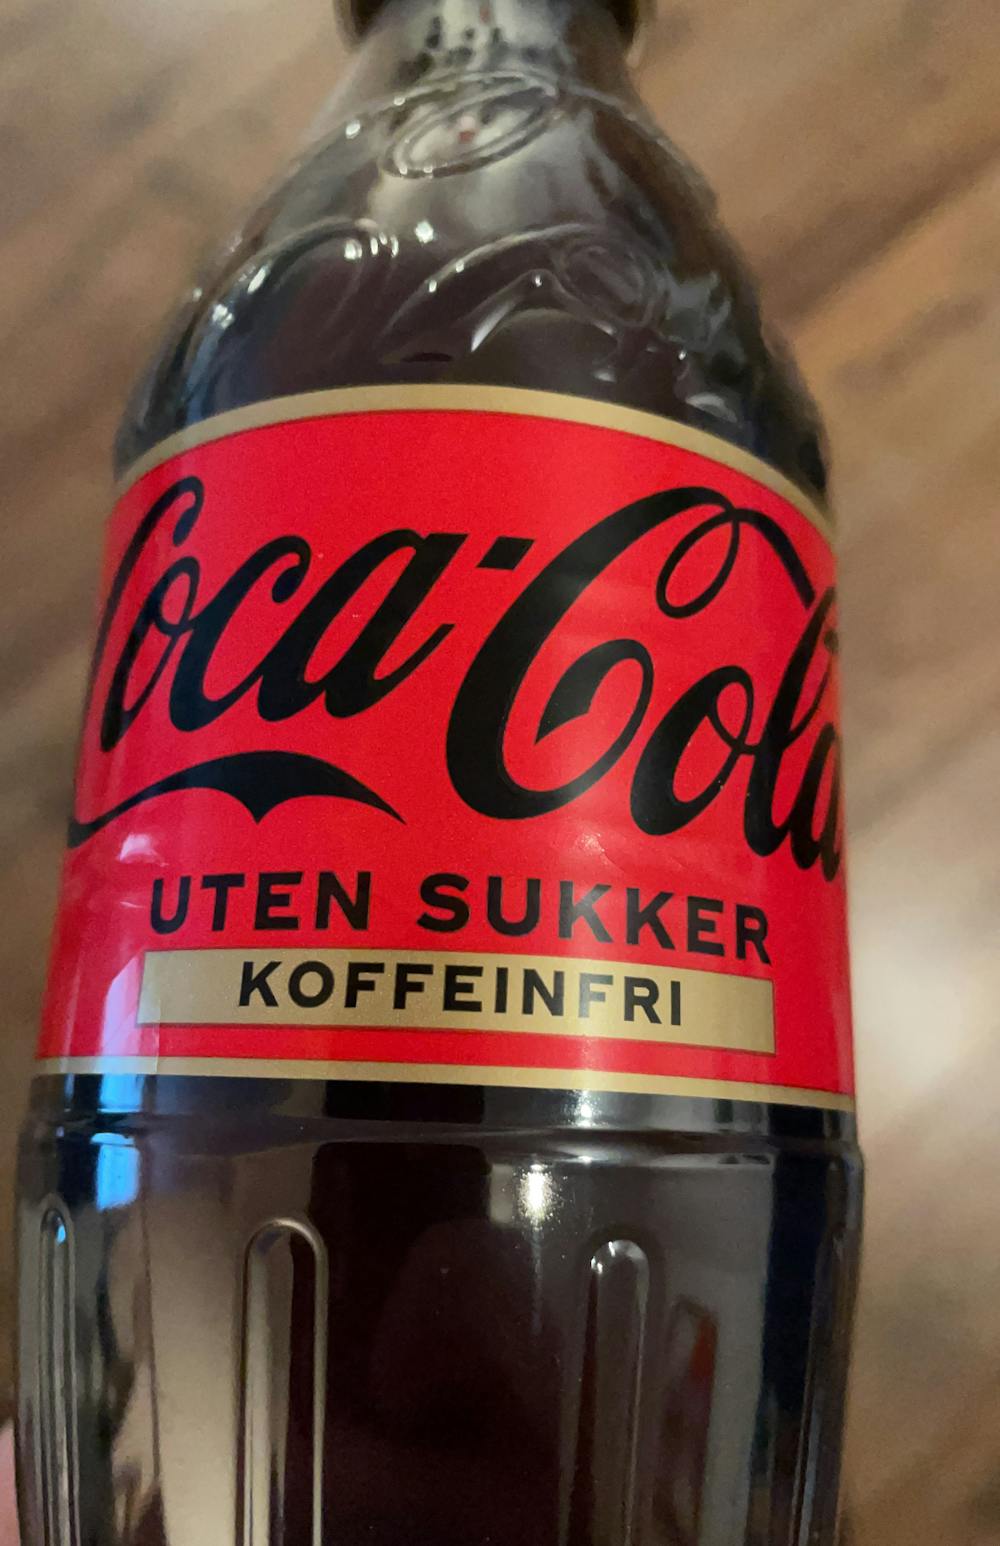 Coca cola, uten sukker og koffeinfri, Coca cola